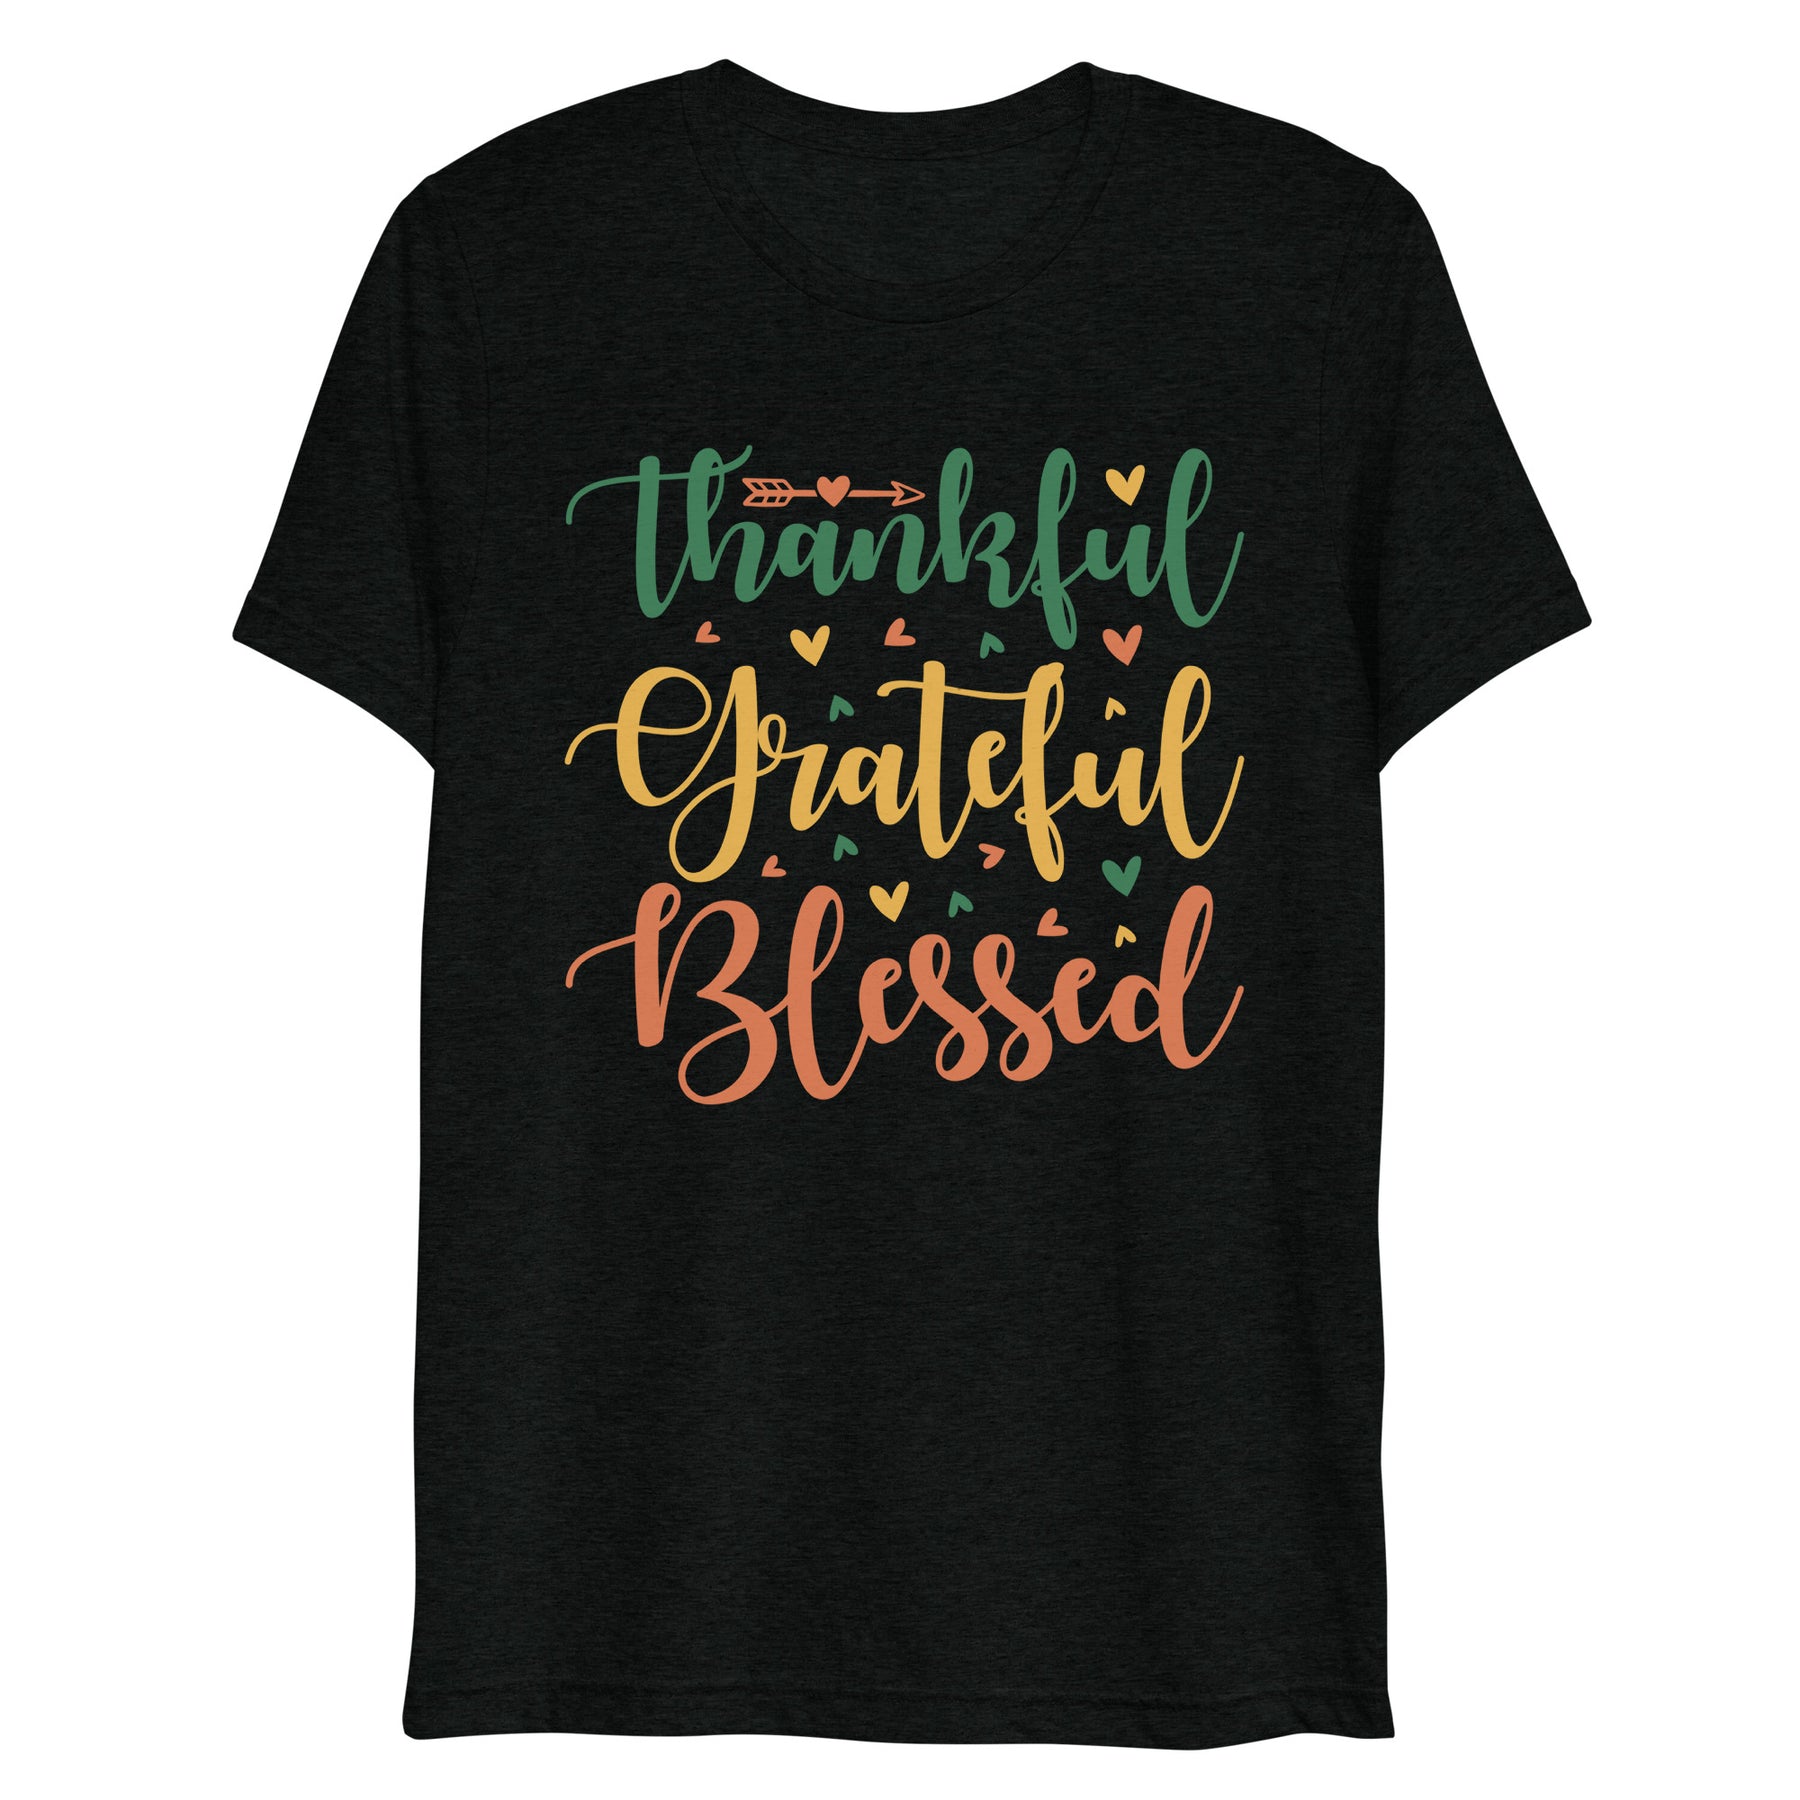 Thankful, Grateful, Blessed - Women's Tri-Blend T-Shirt